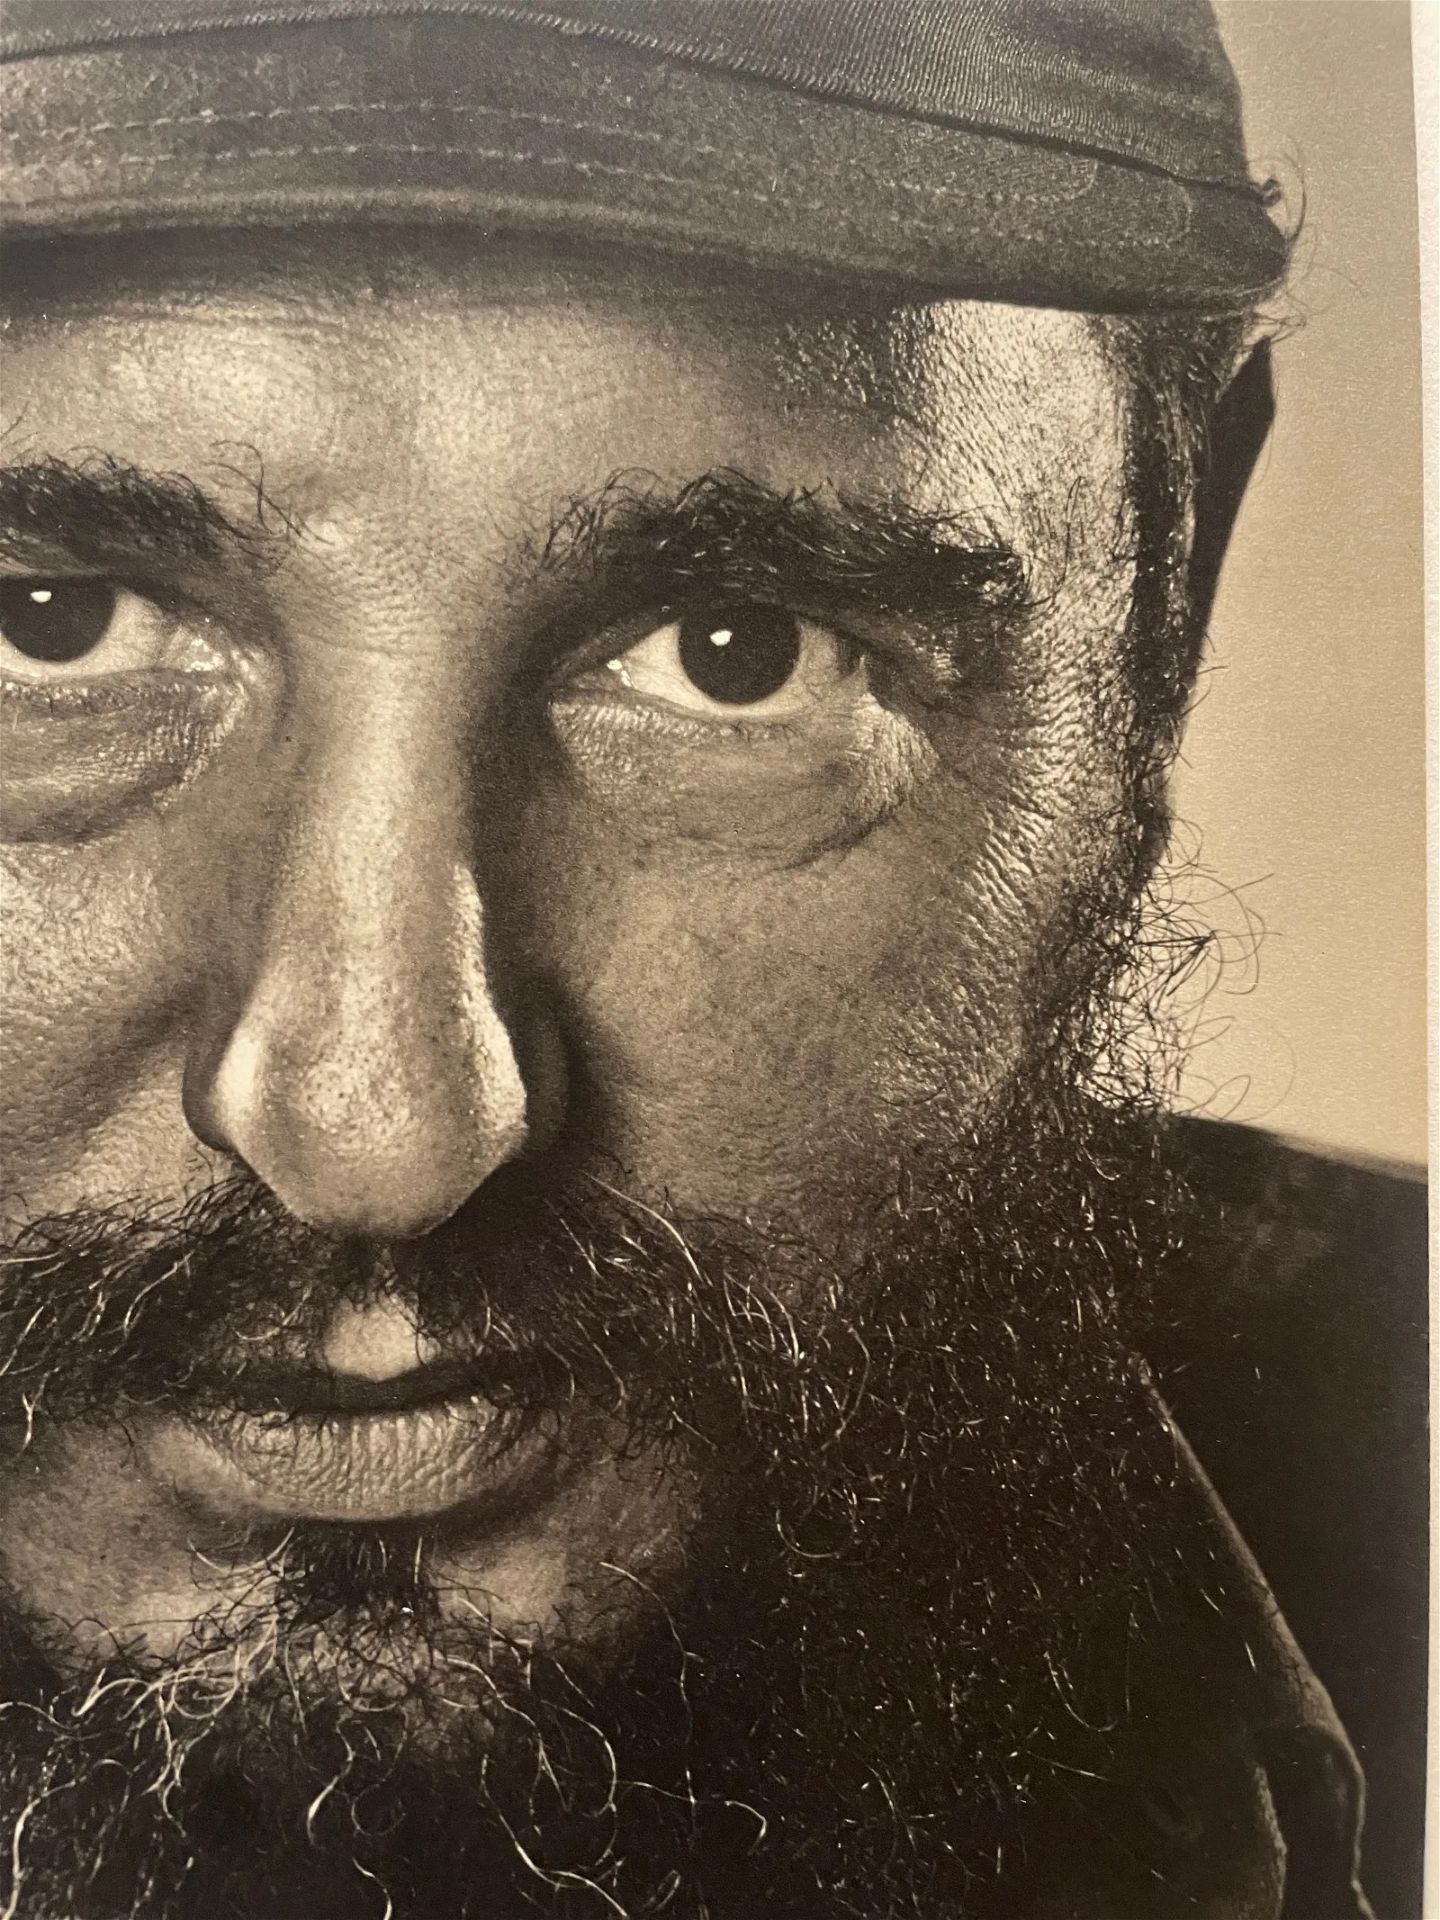 Yousuf Karsh Signed "Fidel Castro" Print - Image 2 of 6